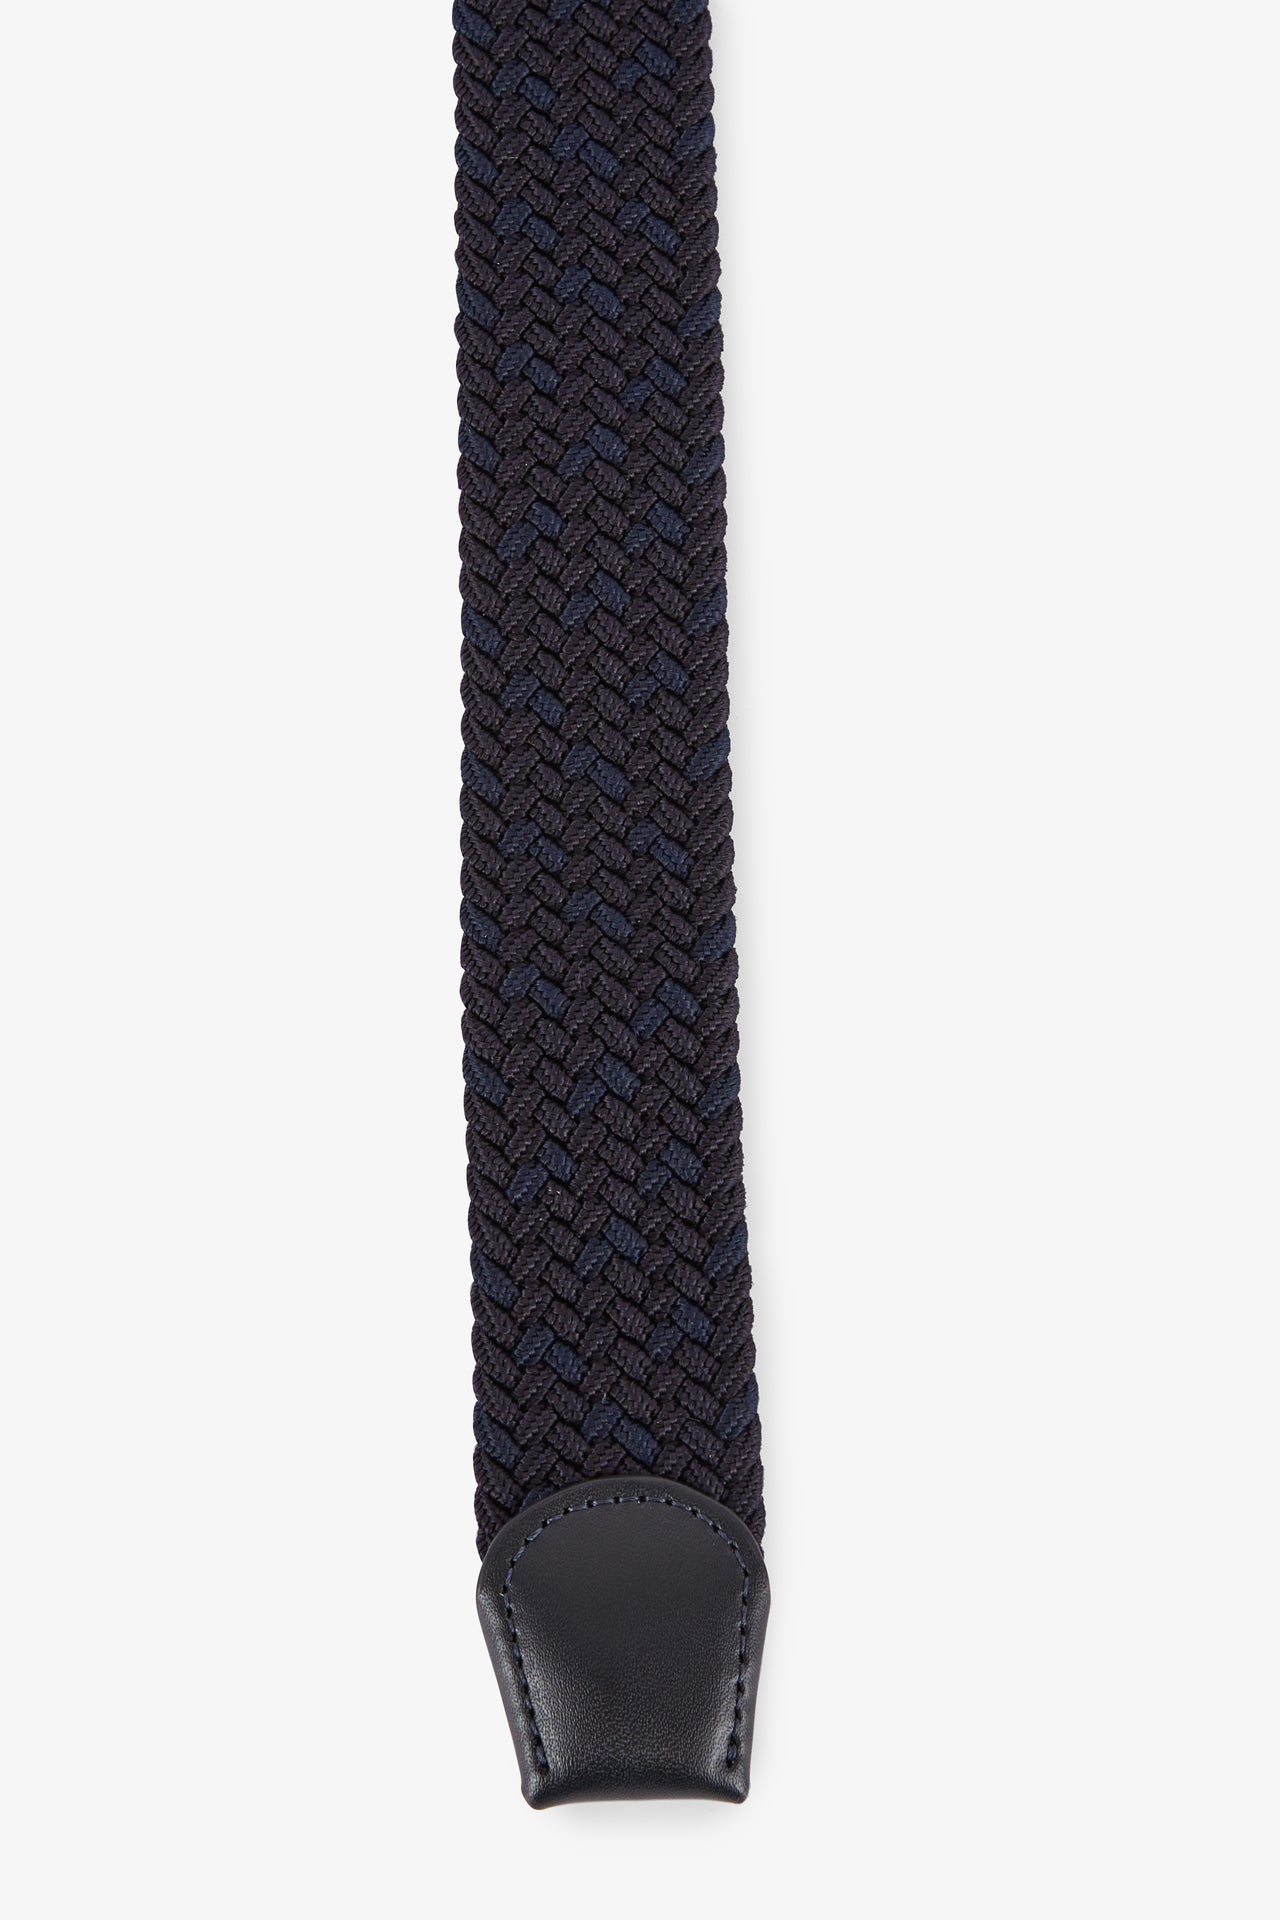 Navy blue braided belt - Image 3